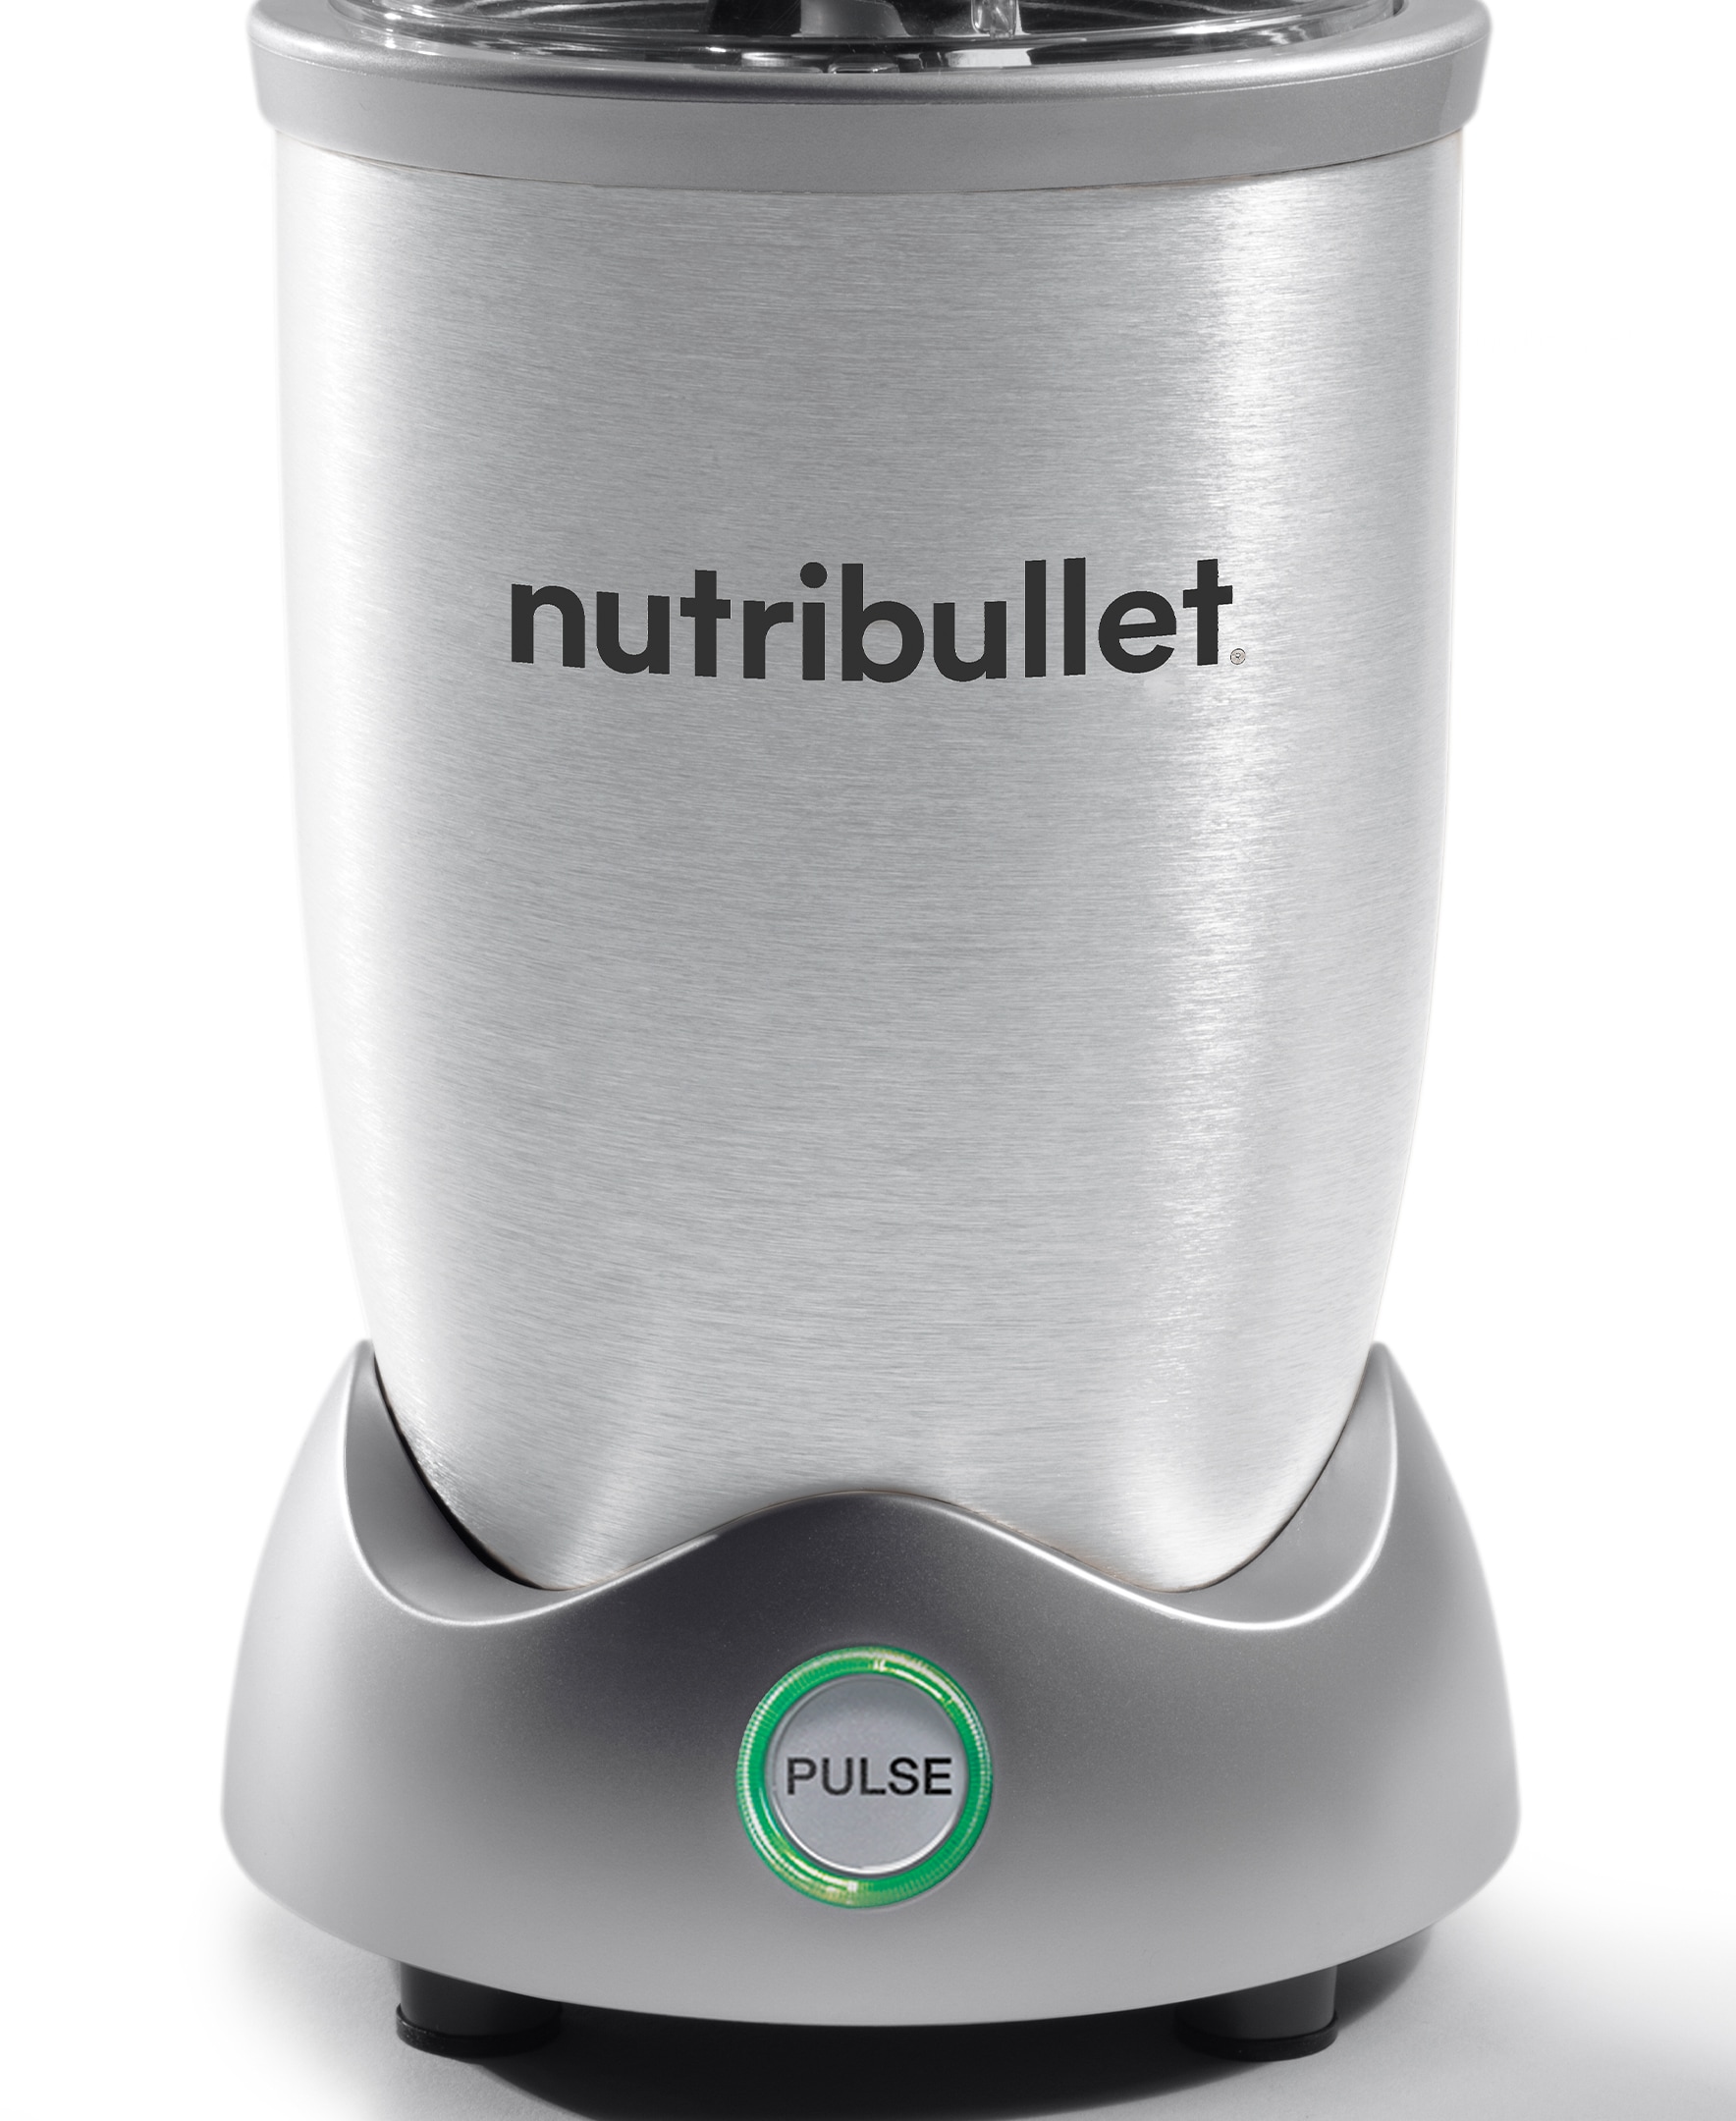 nutribullet 1200-Watt Silver Personal Blender with Detachable